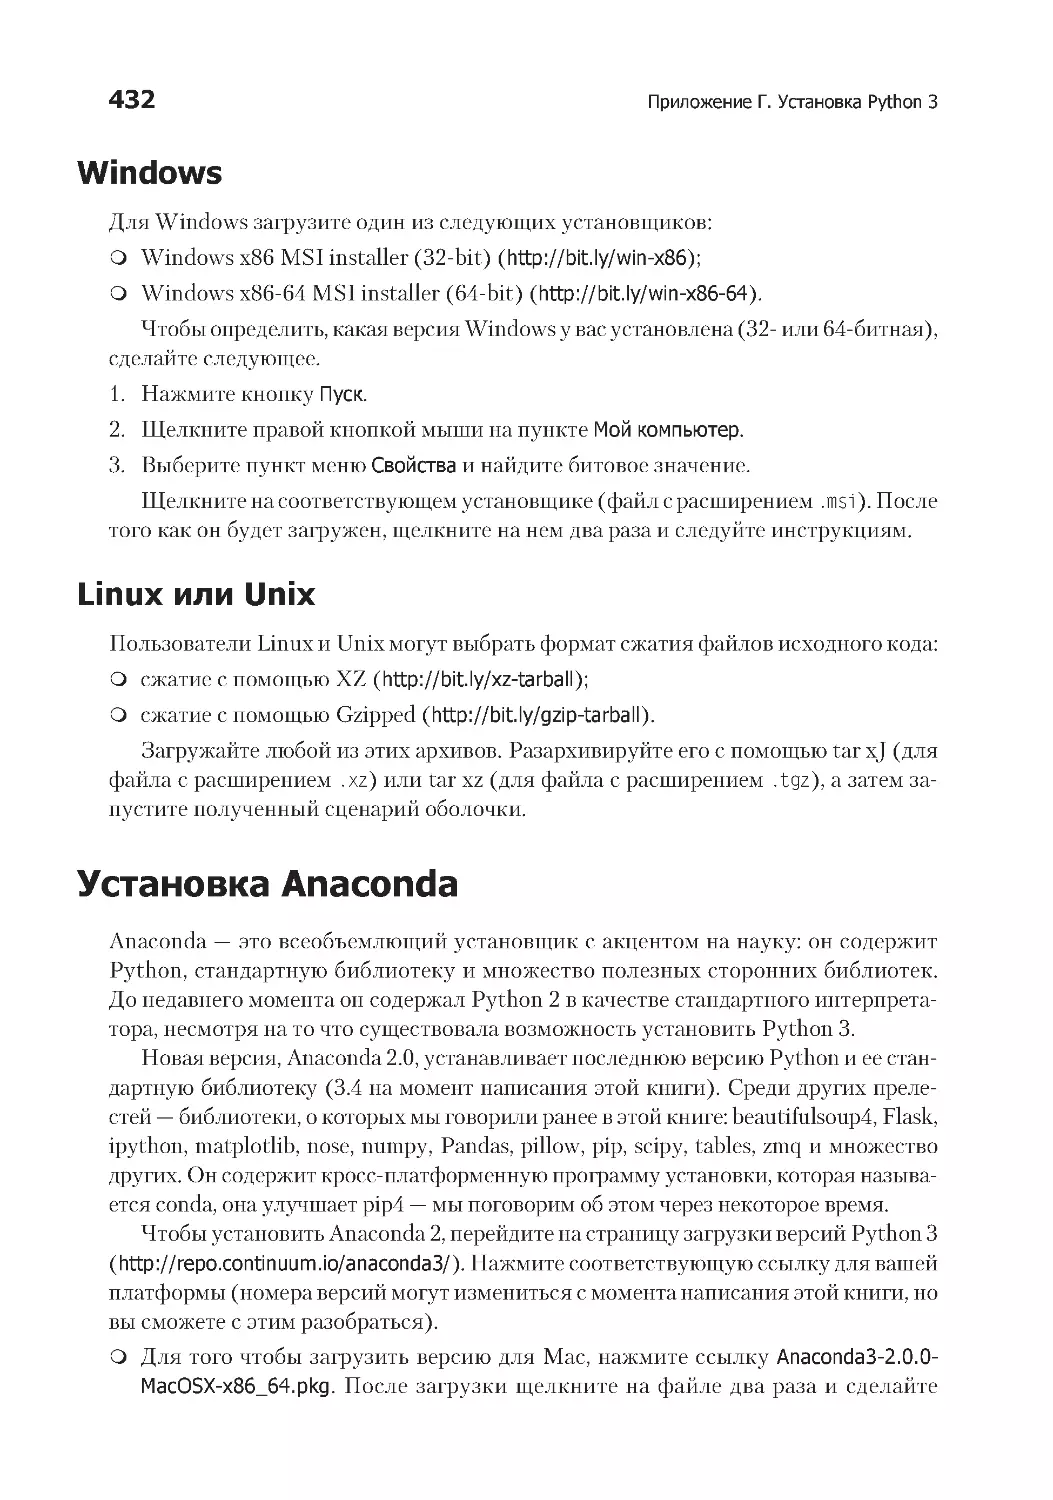 Windows
Linux или Unix
Установка Anaconda